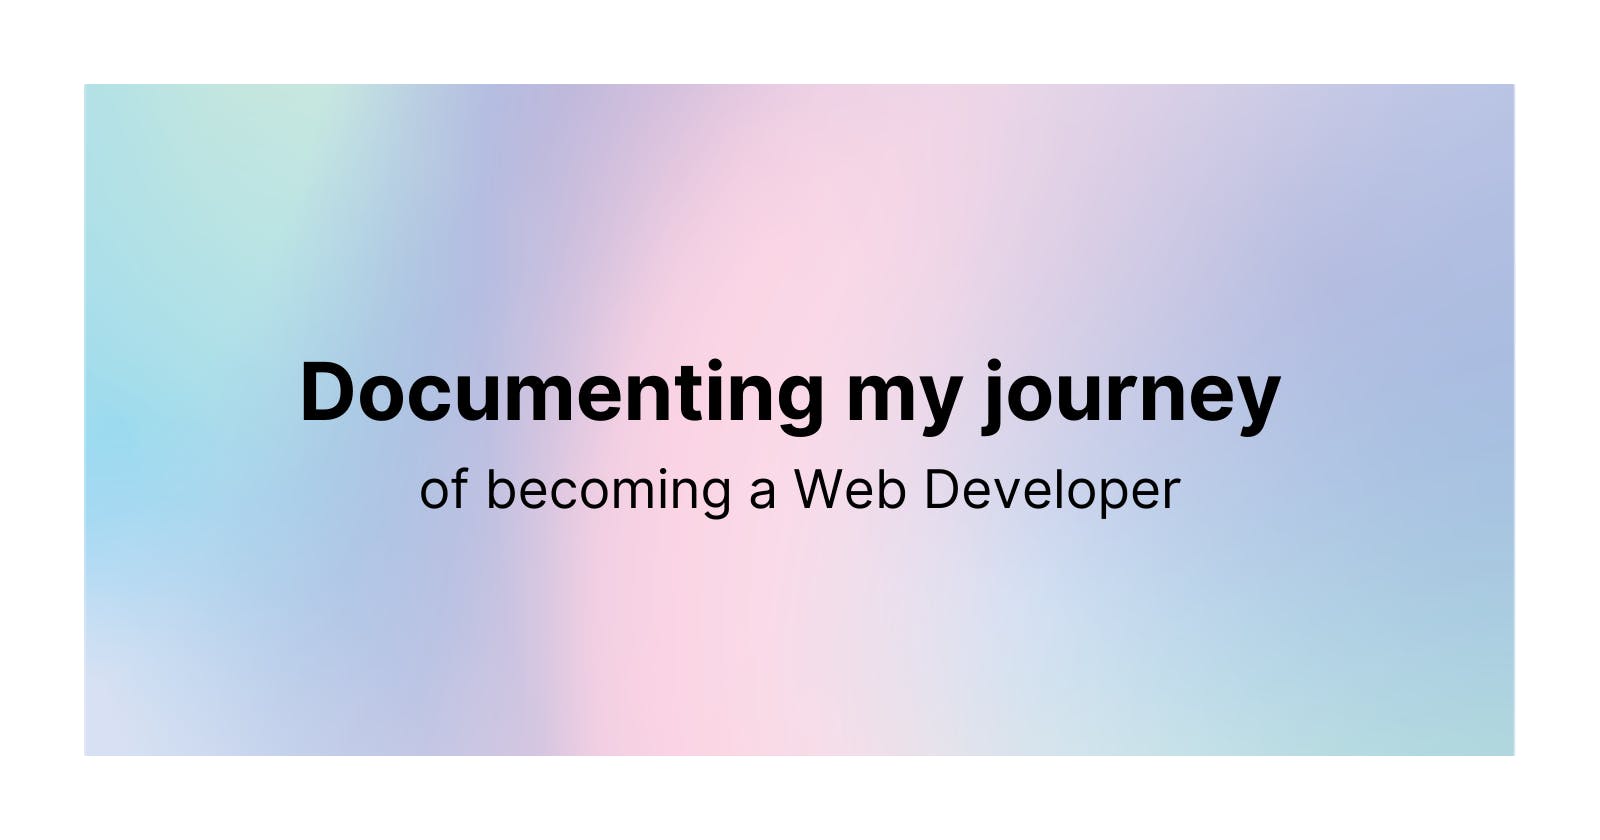 Day 1 of My Web Development Journey.